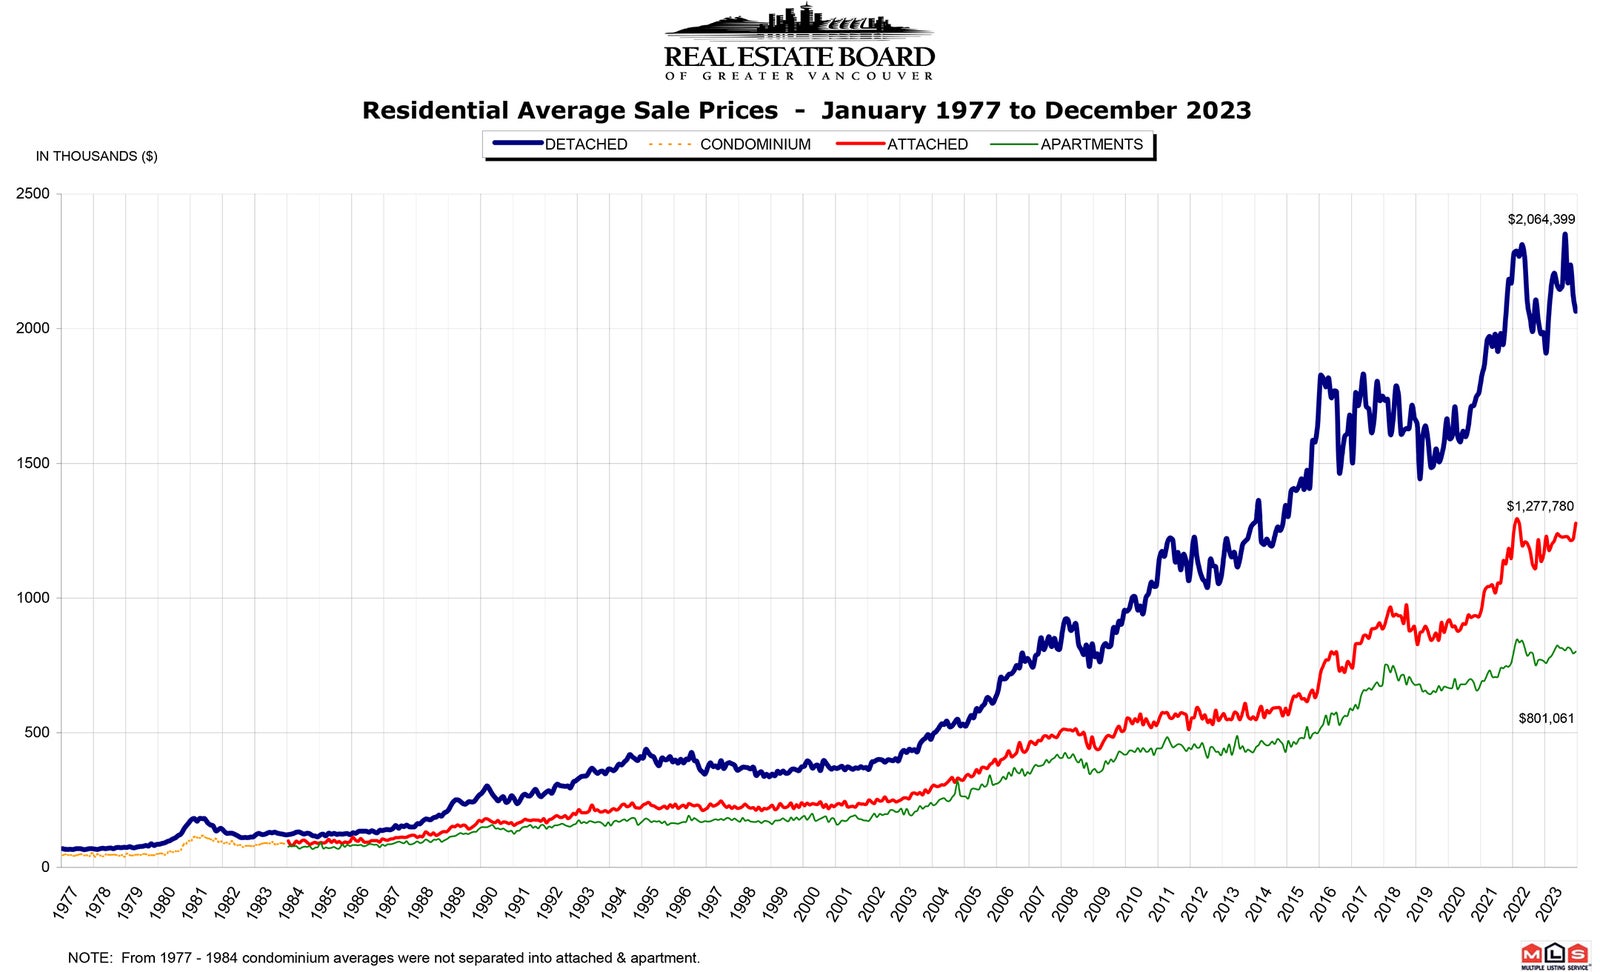 Residential Average Sale Price RASP December 2023 Vancouver Real Estate Chris Frederickson